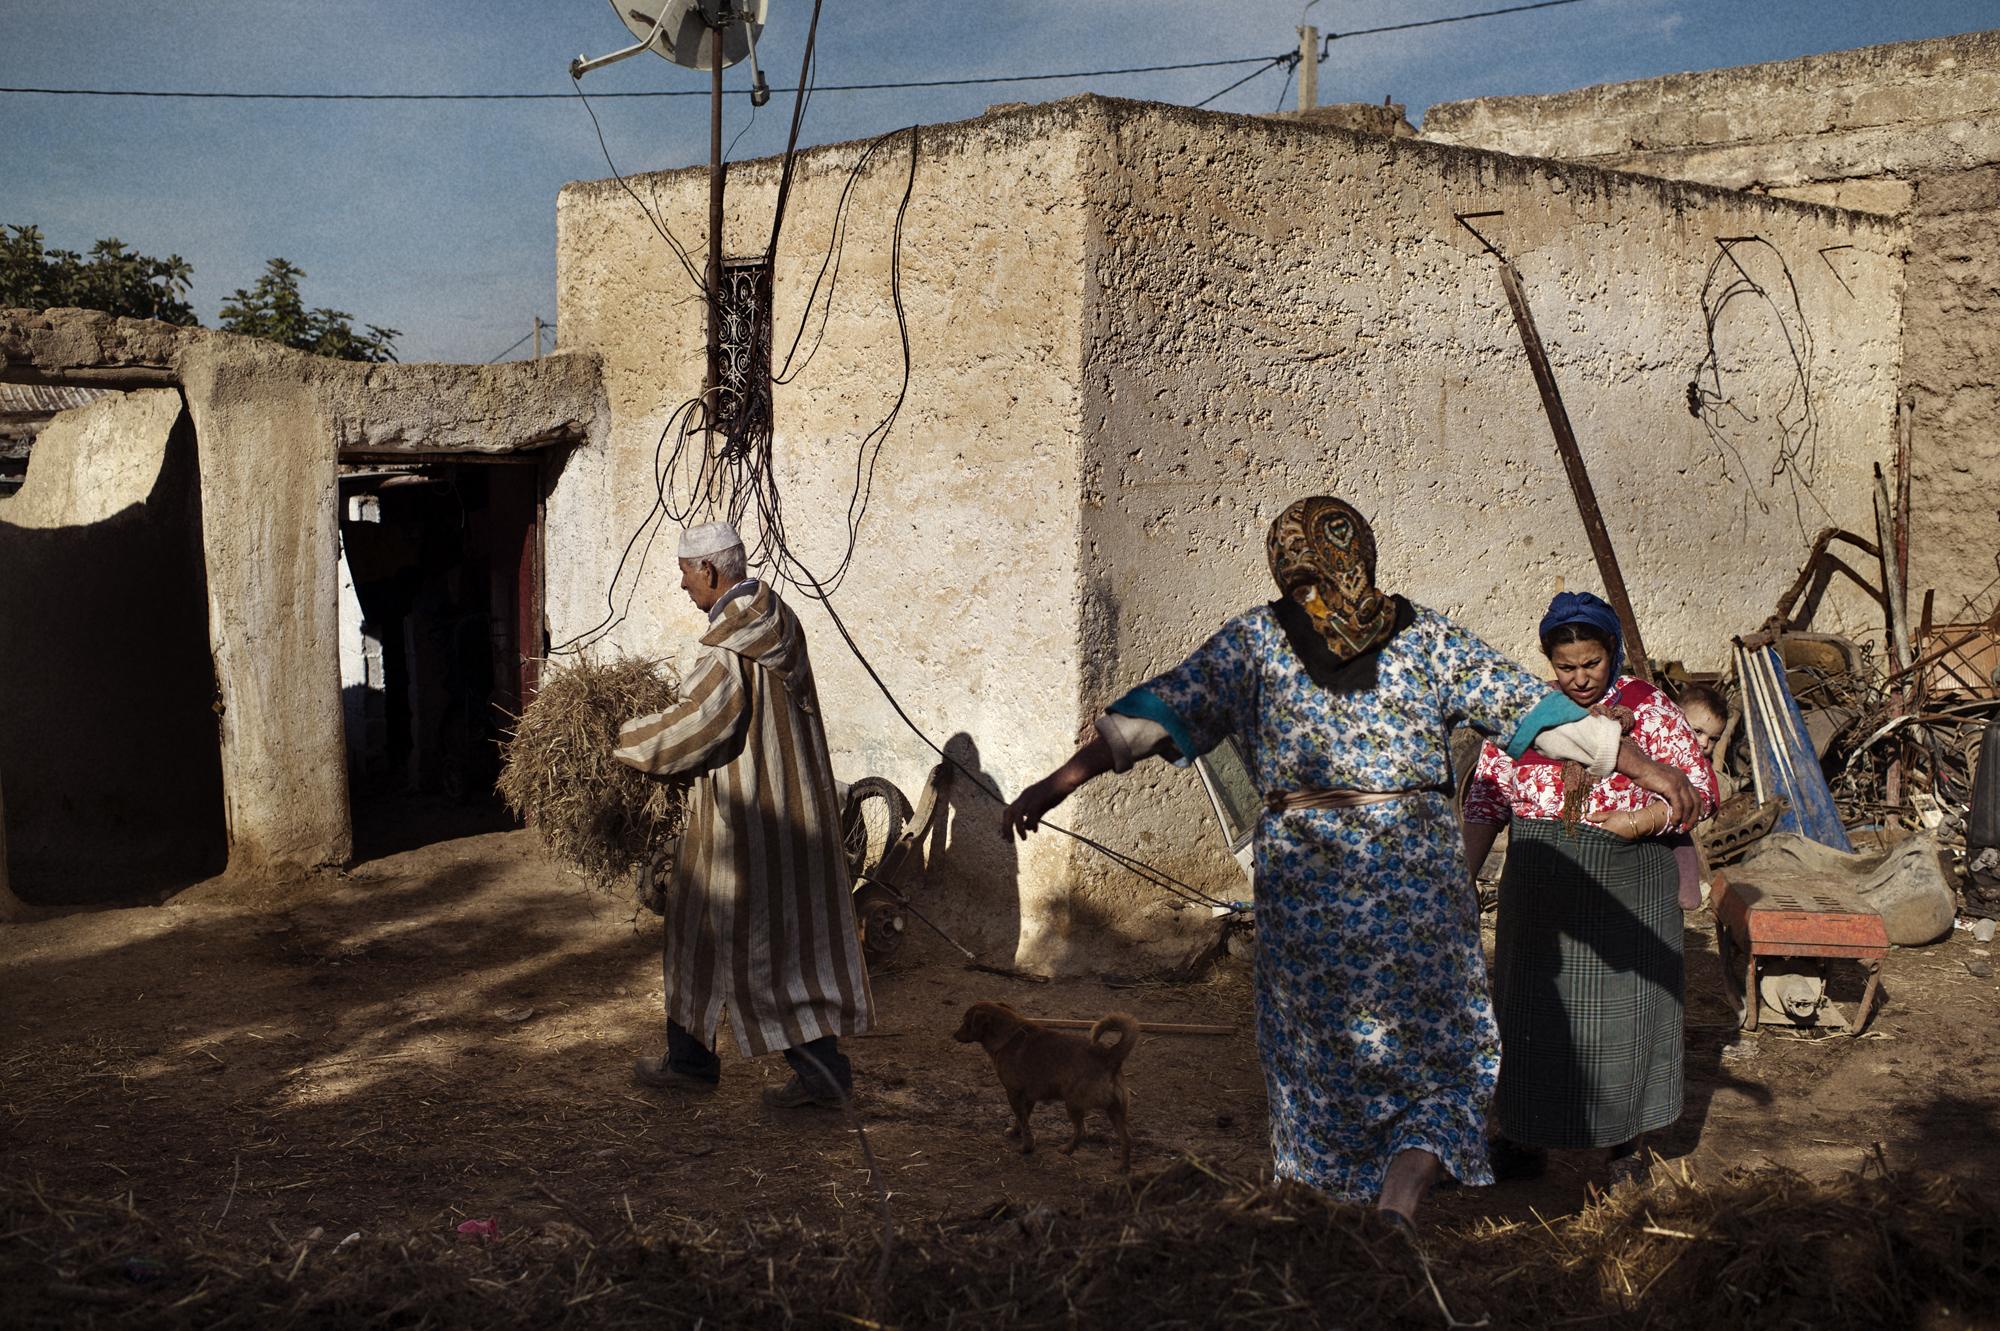 Microcredit / Morocco - Morocco, Oulad Taib. November 2011.
Fatima Bouktib has a...